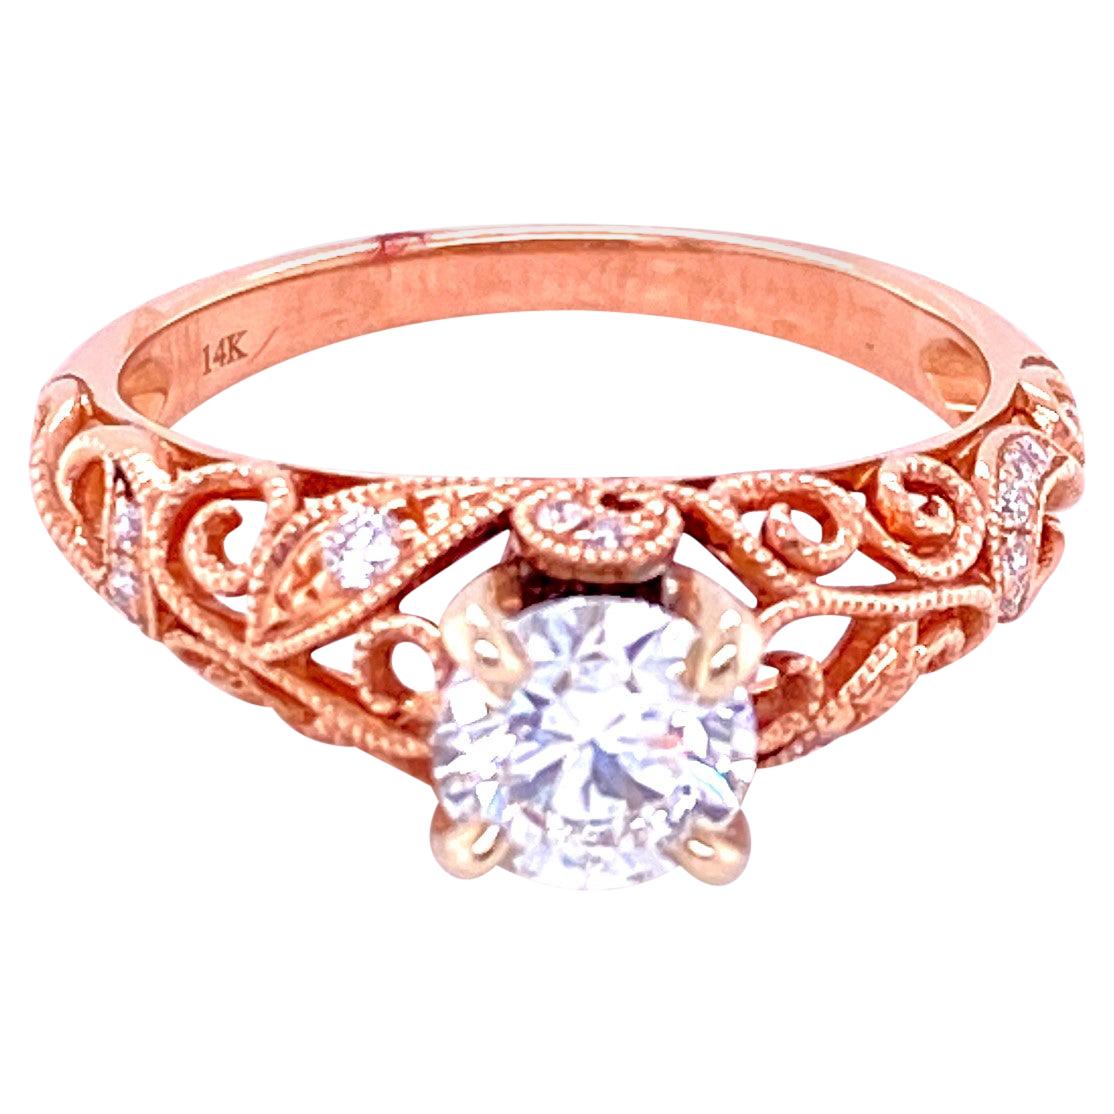 Contemporary Diamond Engagement Ring